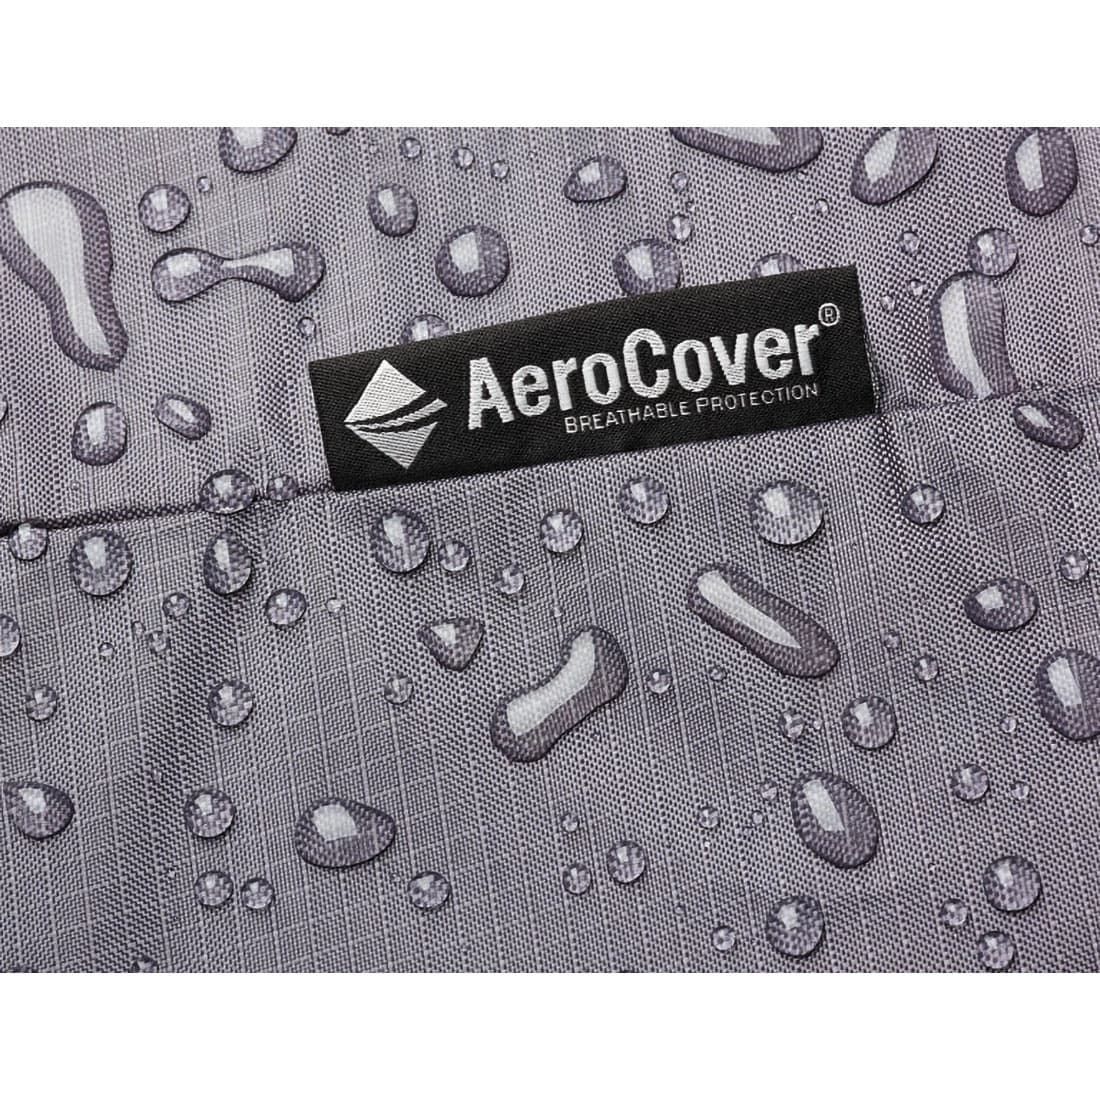 AeroCover Schutzhülle für Loungeecke 270x270x90x65/90cm Polyester